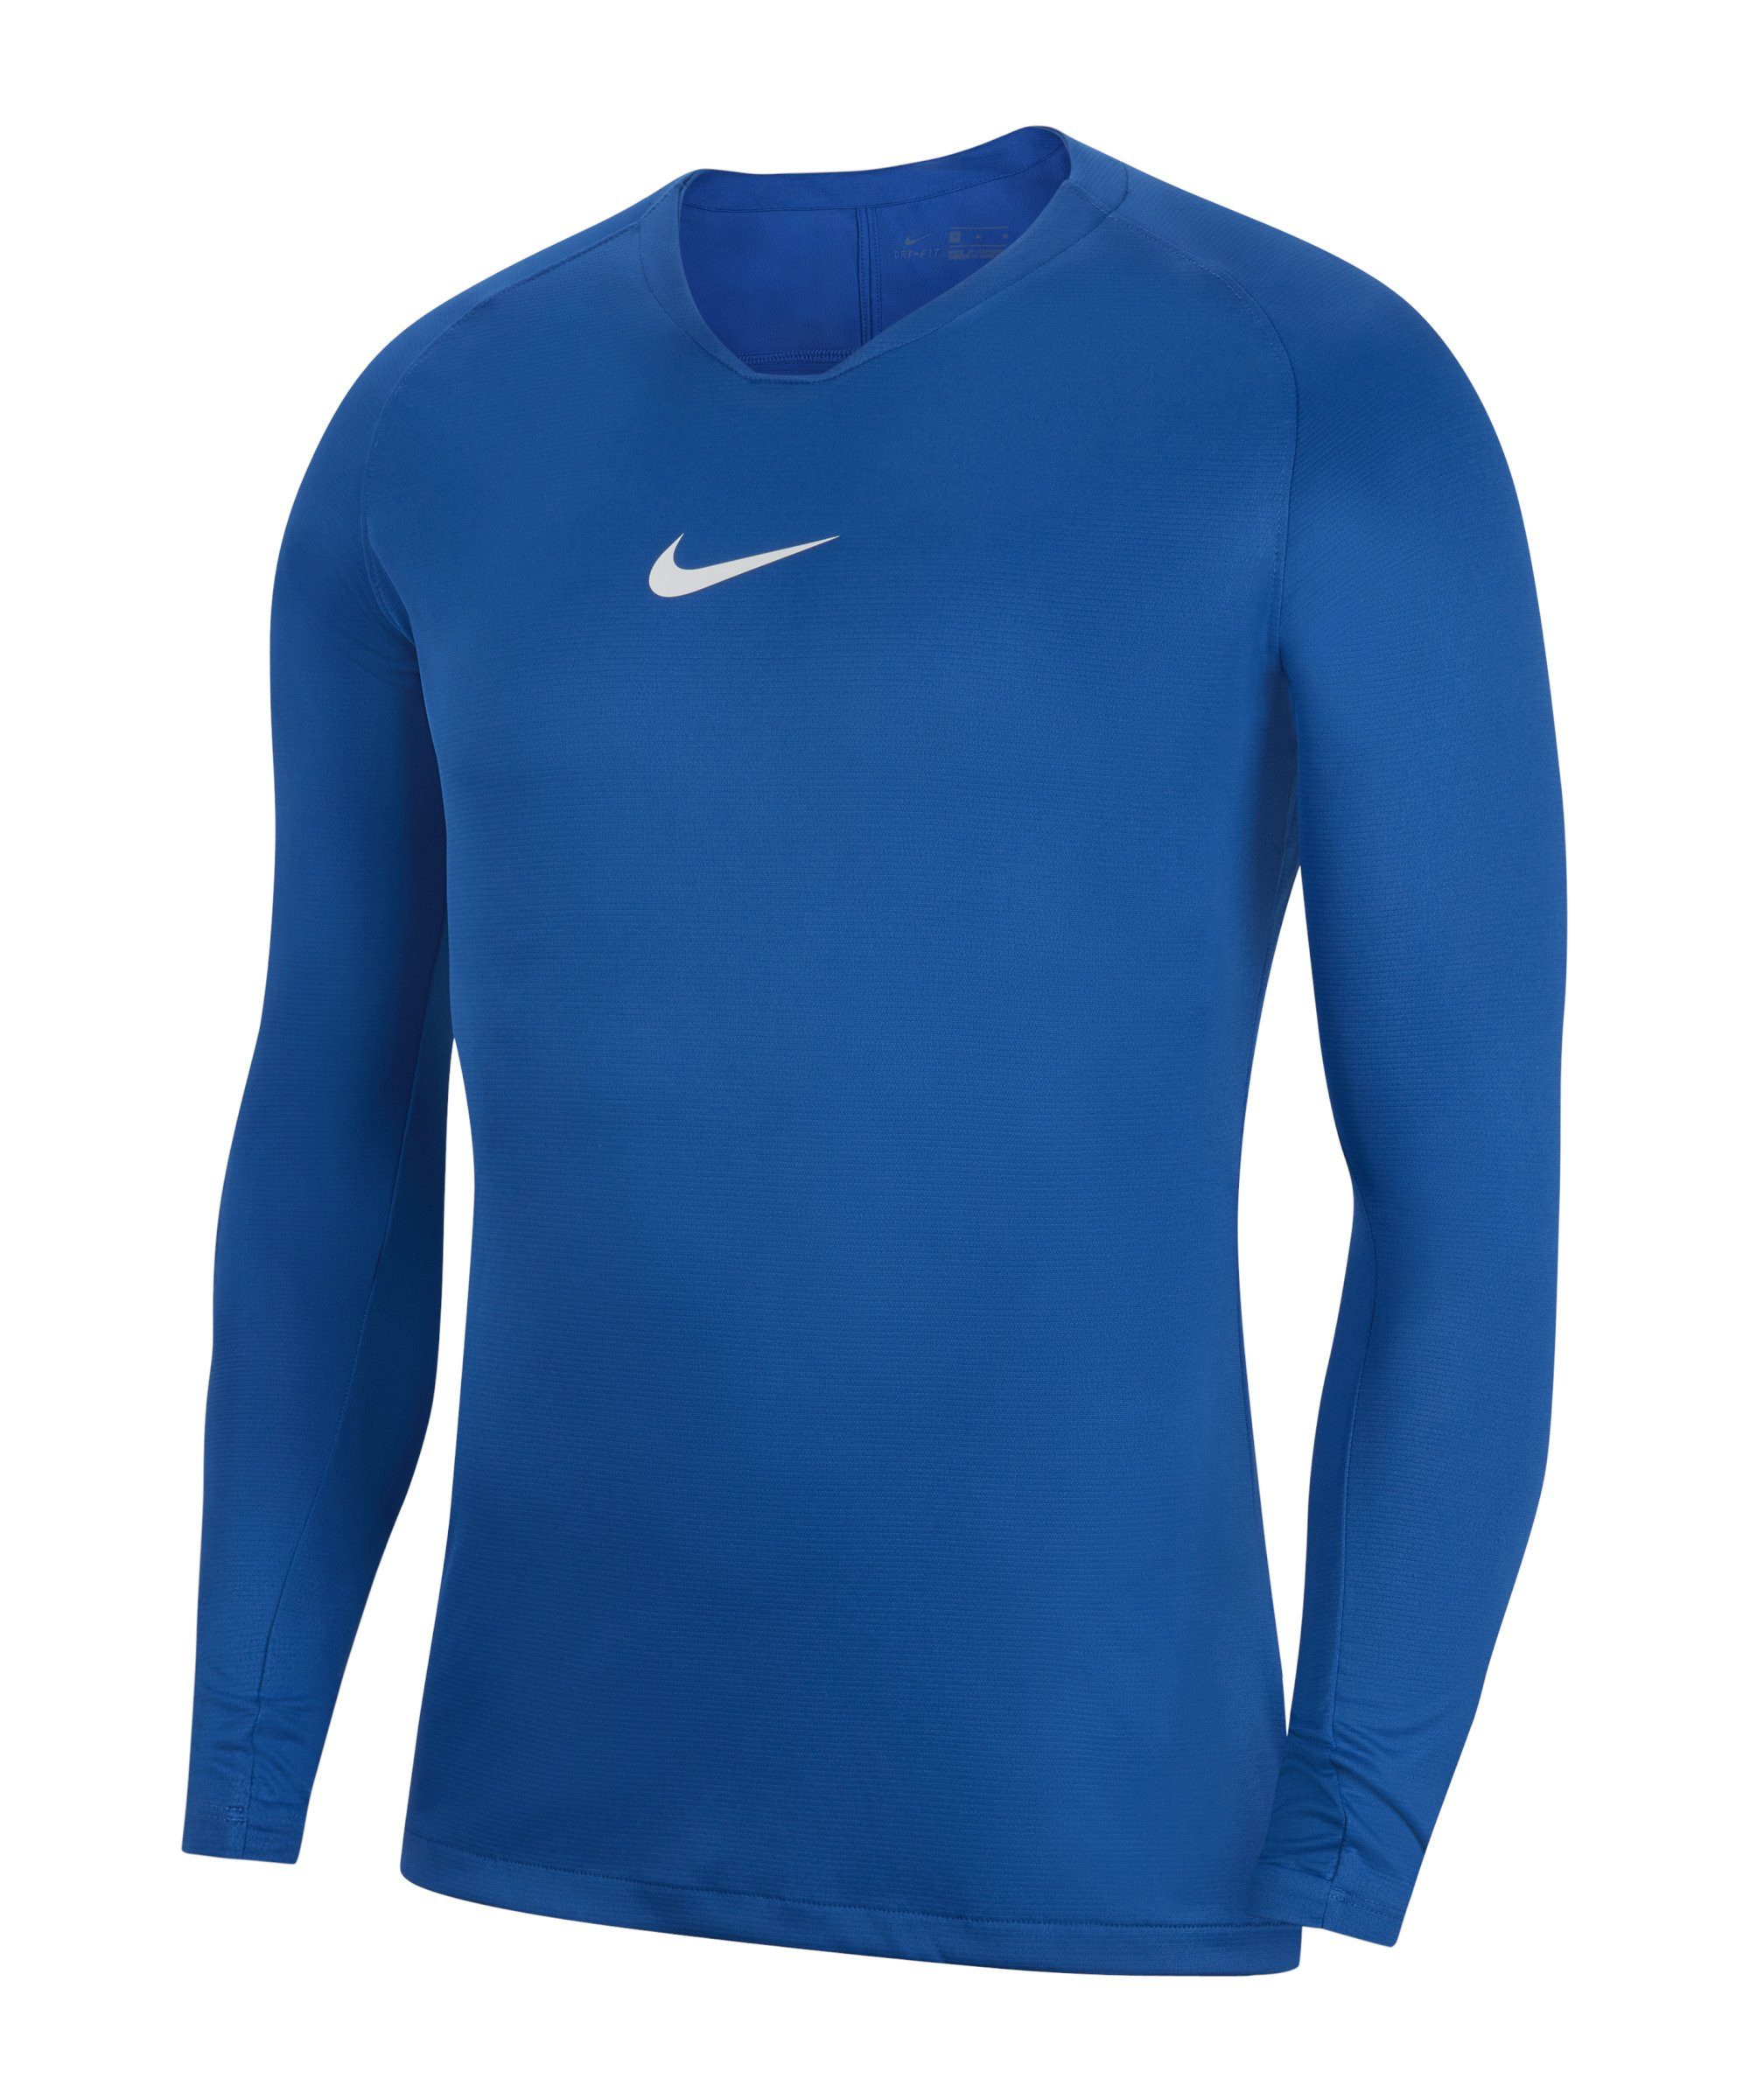 Nike Funktionsshirt blauweiss Park Daumenöffnung Layer First Langarmshirt